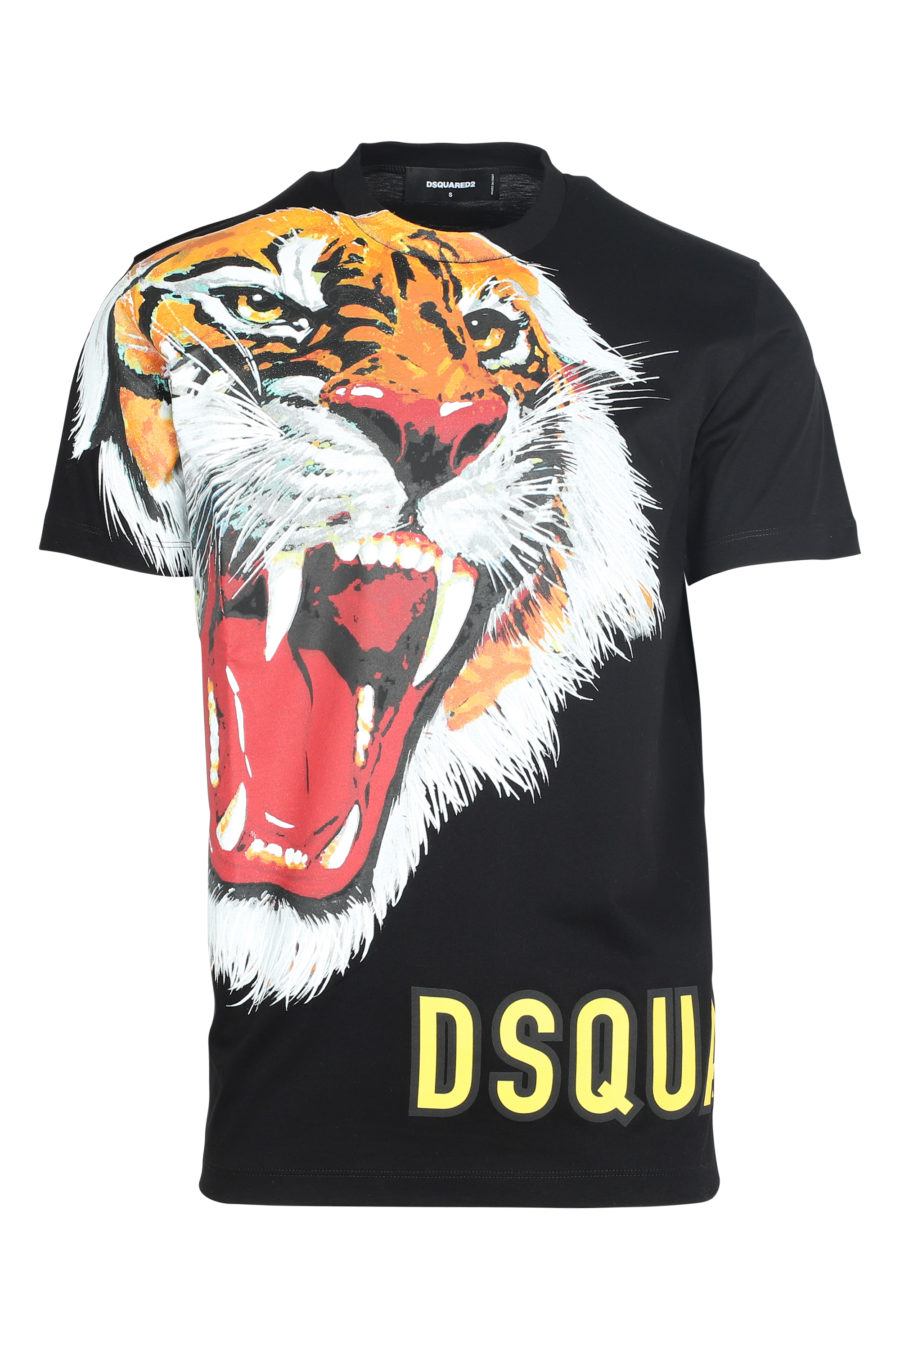 Camiseta negra con tigre grande - IMG 5869